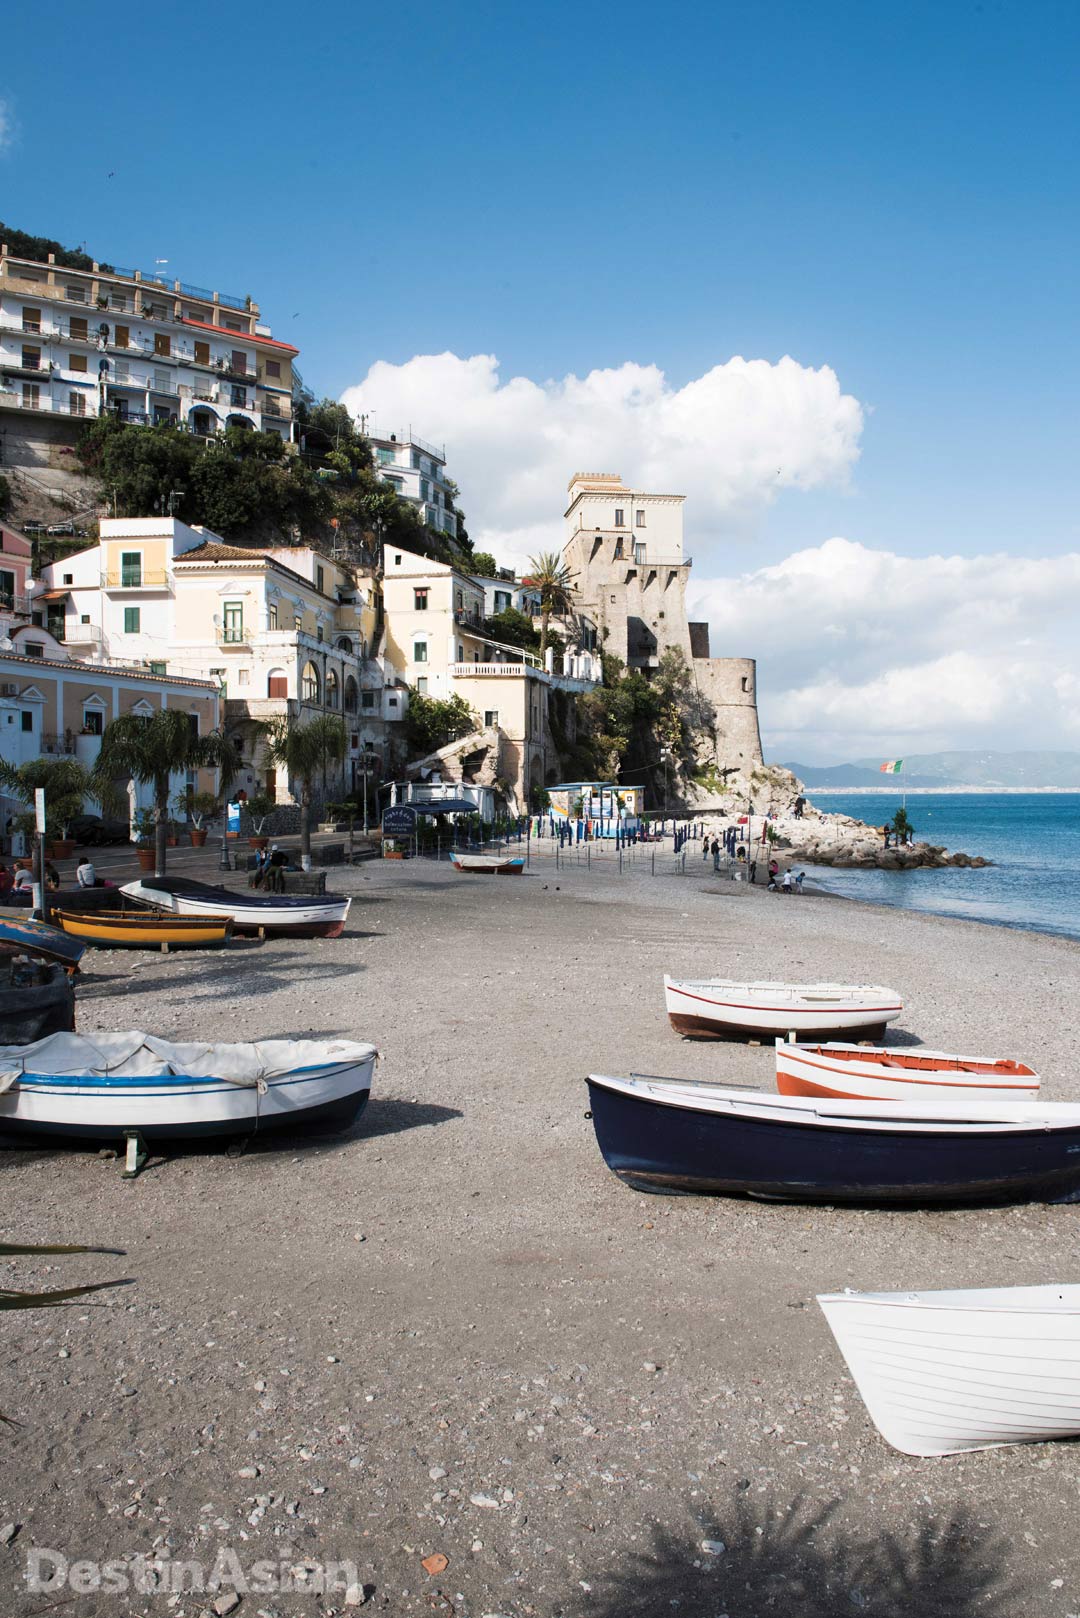 The main beach at Cetara, a fishing town on the Amalfi Coast.